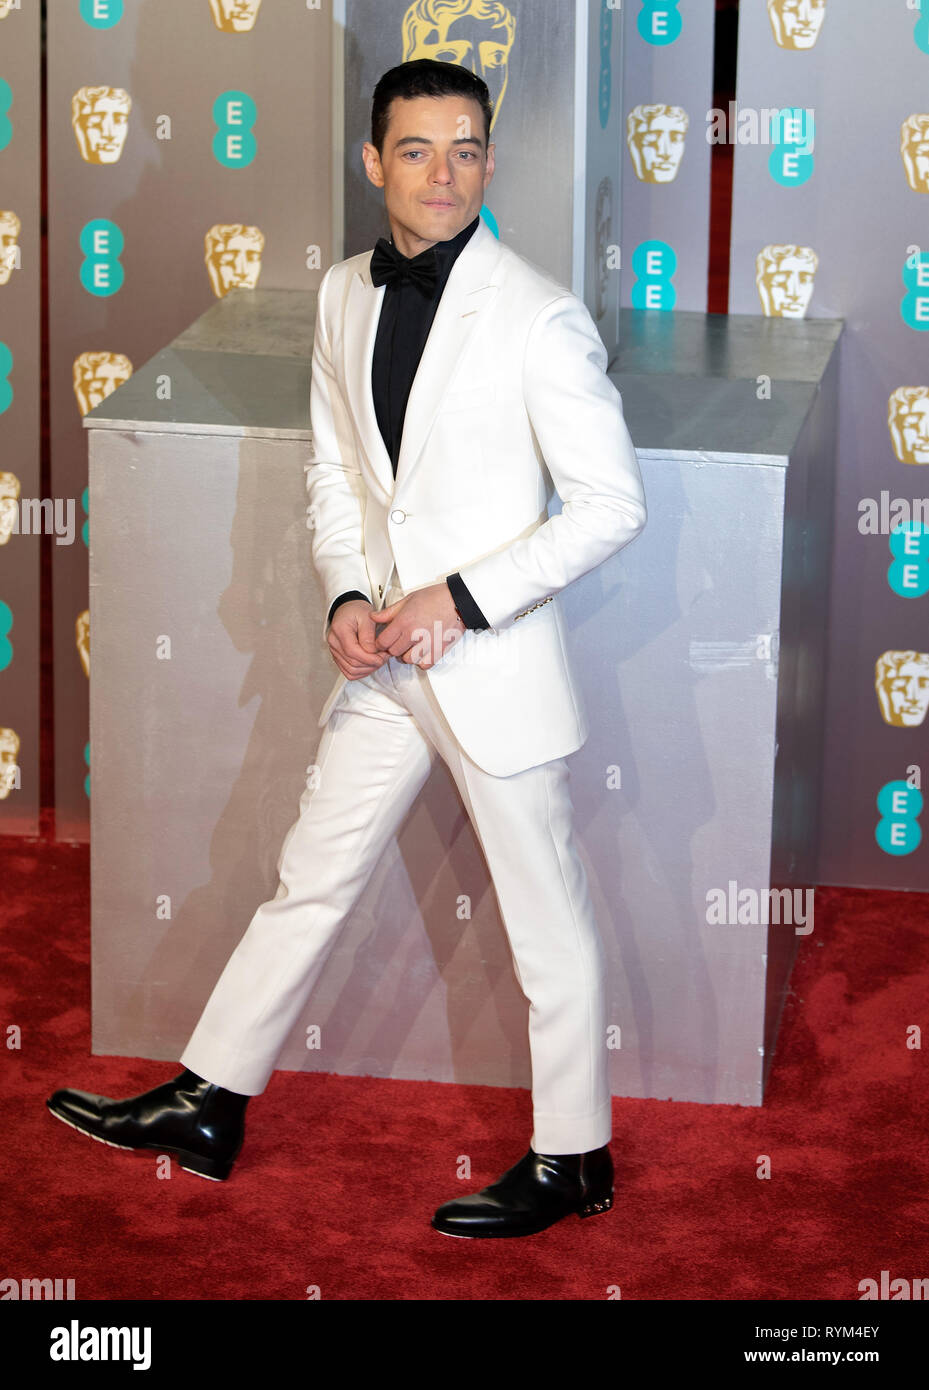 72nd EE British Academy Film Awards (BAFTAs) - Arrivals Featuring: Rami  Malek Where: London, United Kingdom When: 10 Feb 2019 Credit: WENN.com  Stock Photo - Alamy